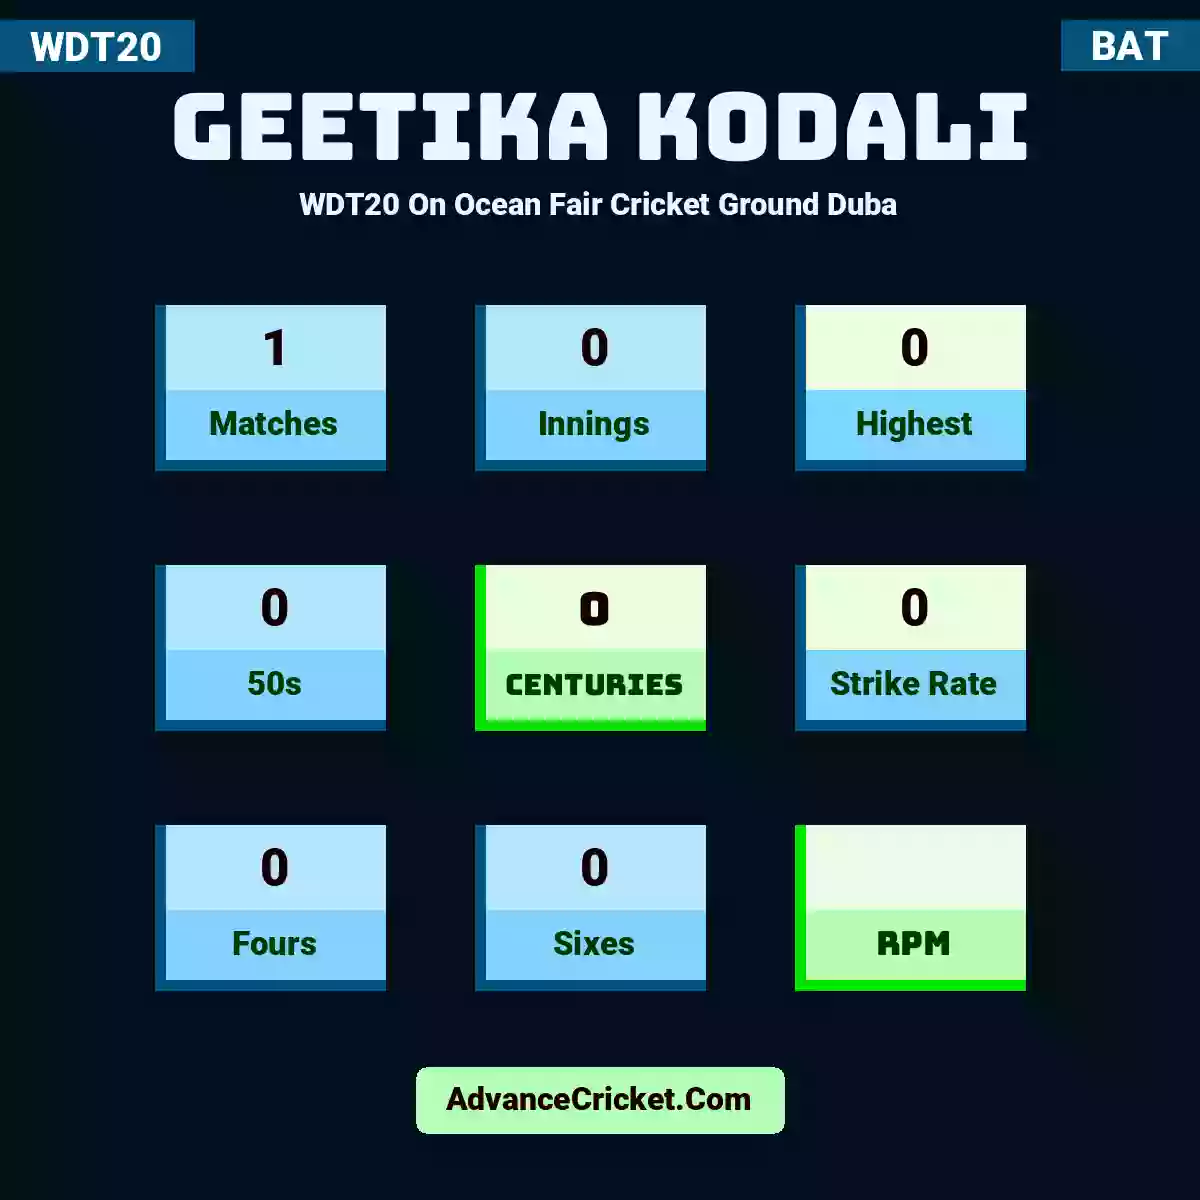 Geetika Kodali WDT20  On Ocean Fair Cricket Ground Duba, Geetika Kodali played 1 matches, scored 0 runs as highest, 0 half-centuries, and 0 centuries, with a strike rate of 0. G.Kodali hit 0 fours and 0 sixes.